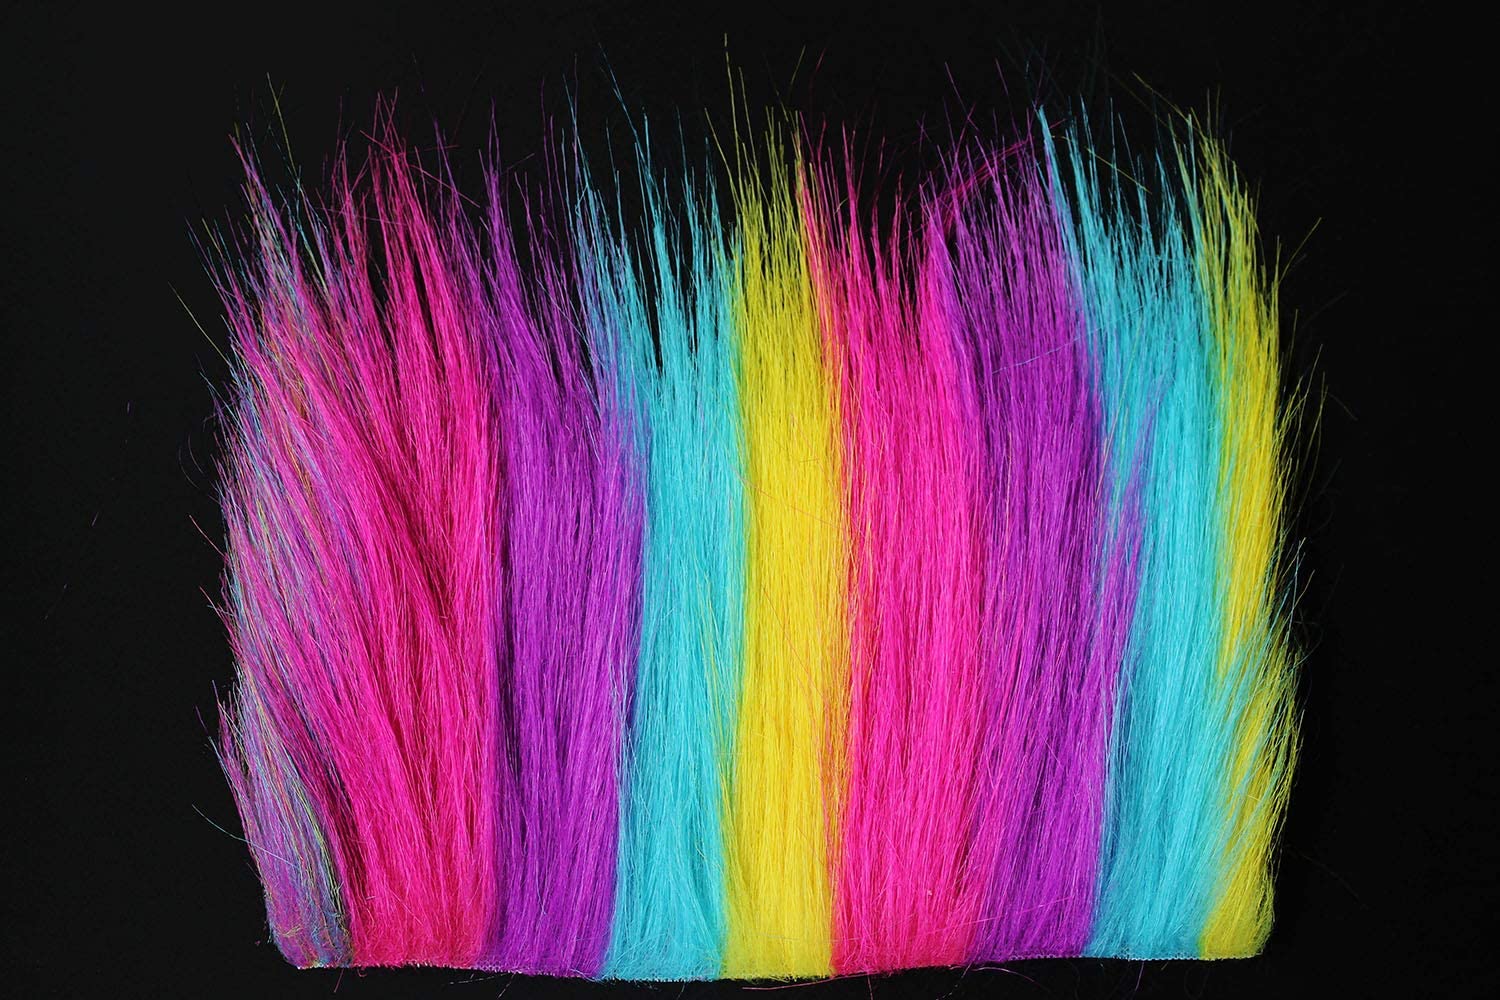 Tigofly Furabou Rainbow Synthetic Craft Fur, 2-Piece